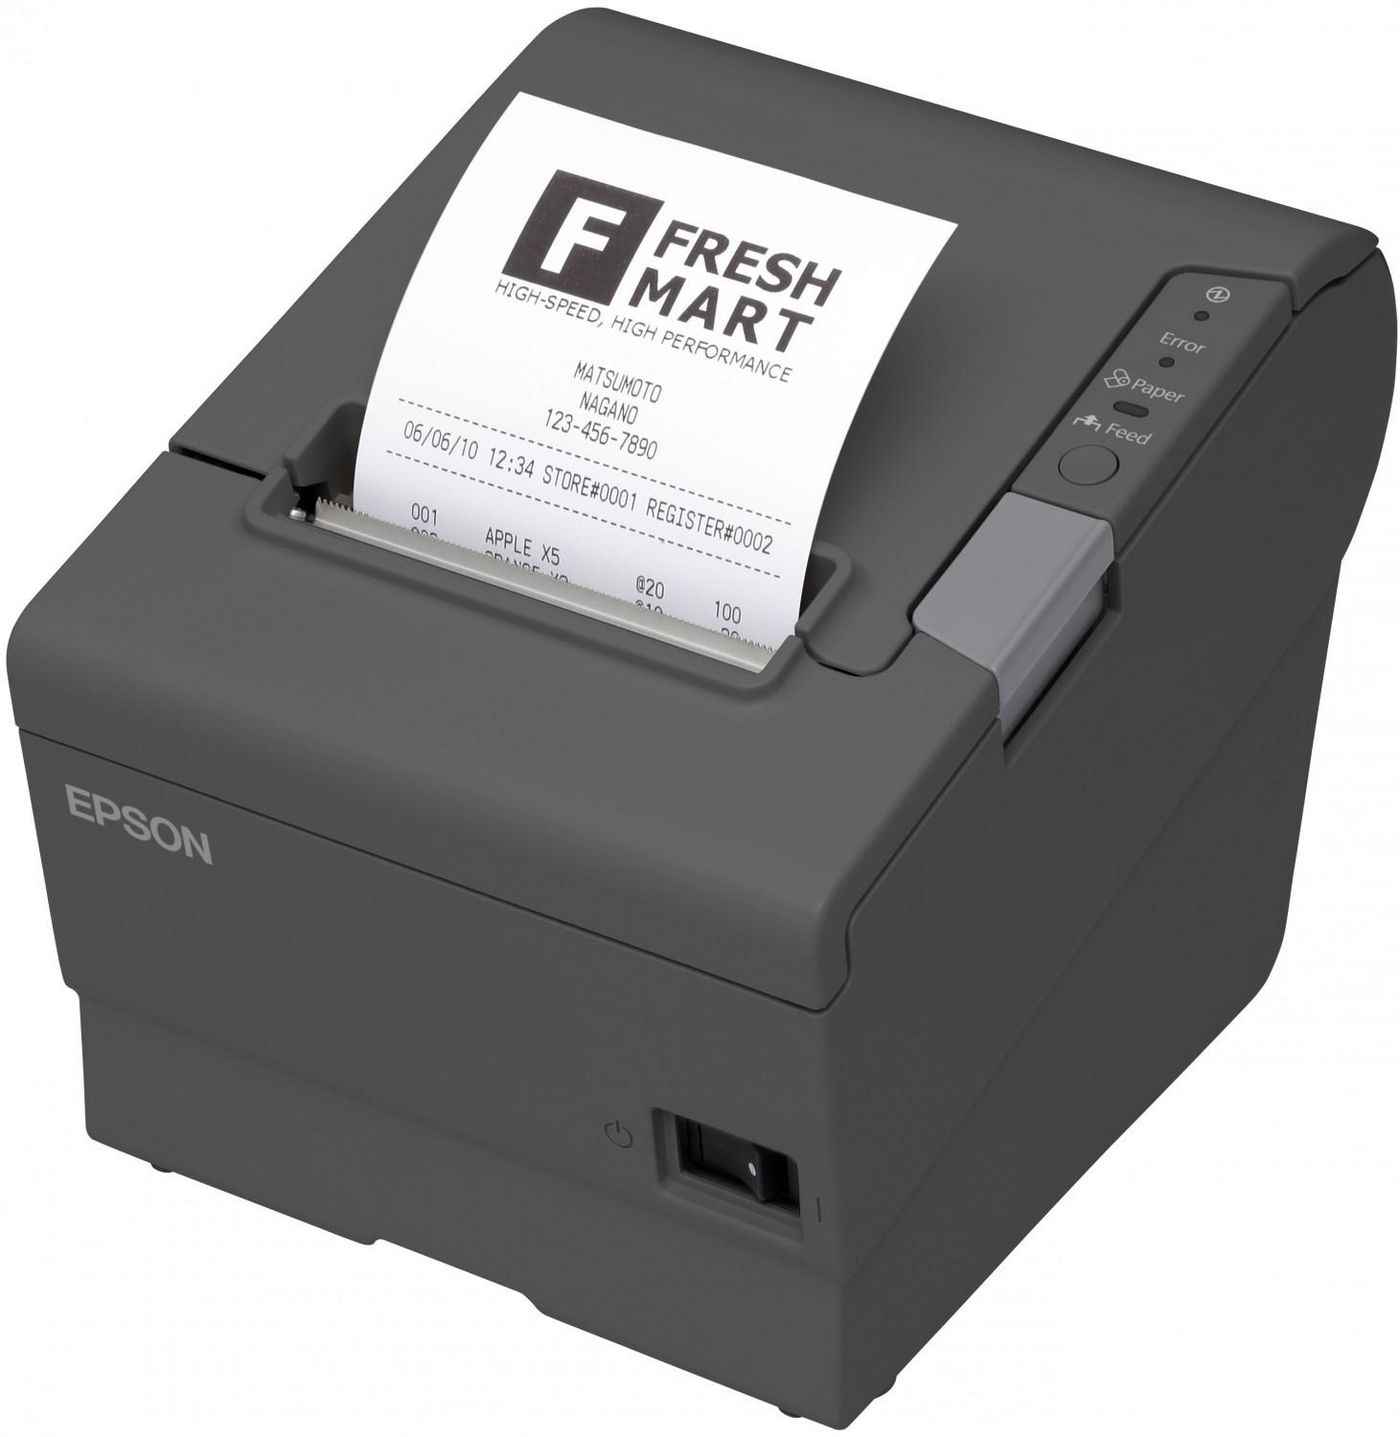 Tm-t88v- (042) - Receipt Printer - Thermal - 72mm - USB / Serial - Dark Grey